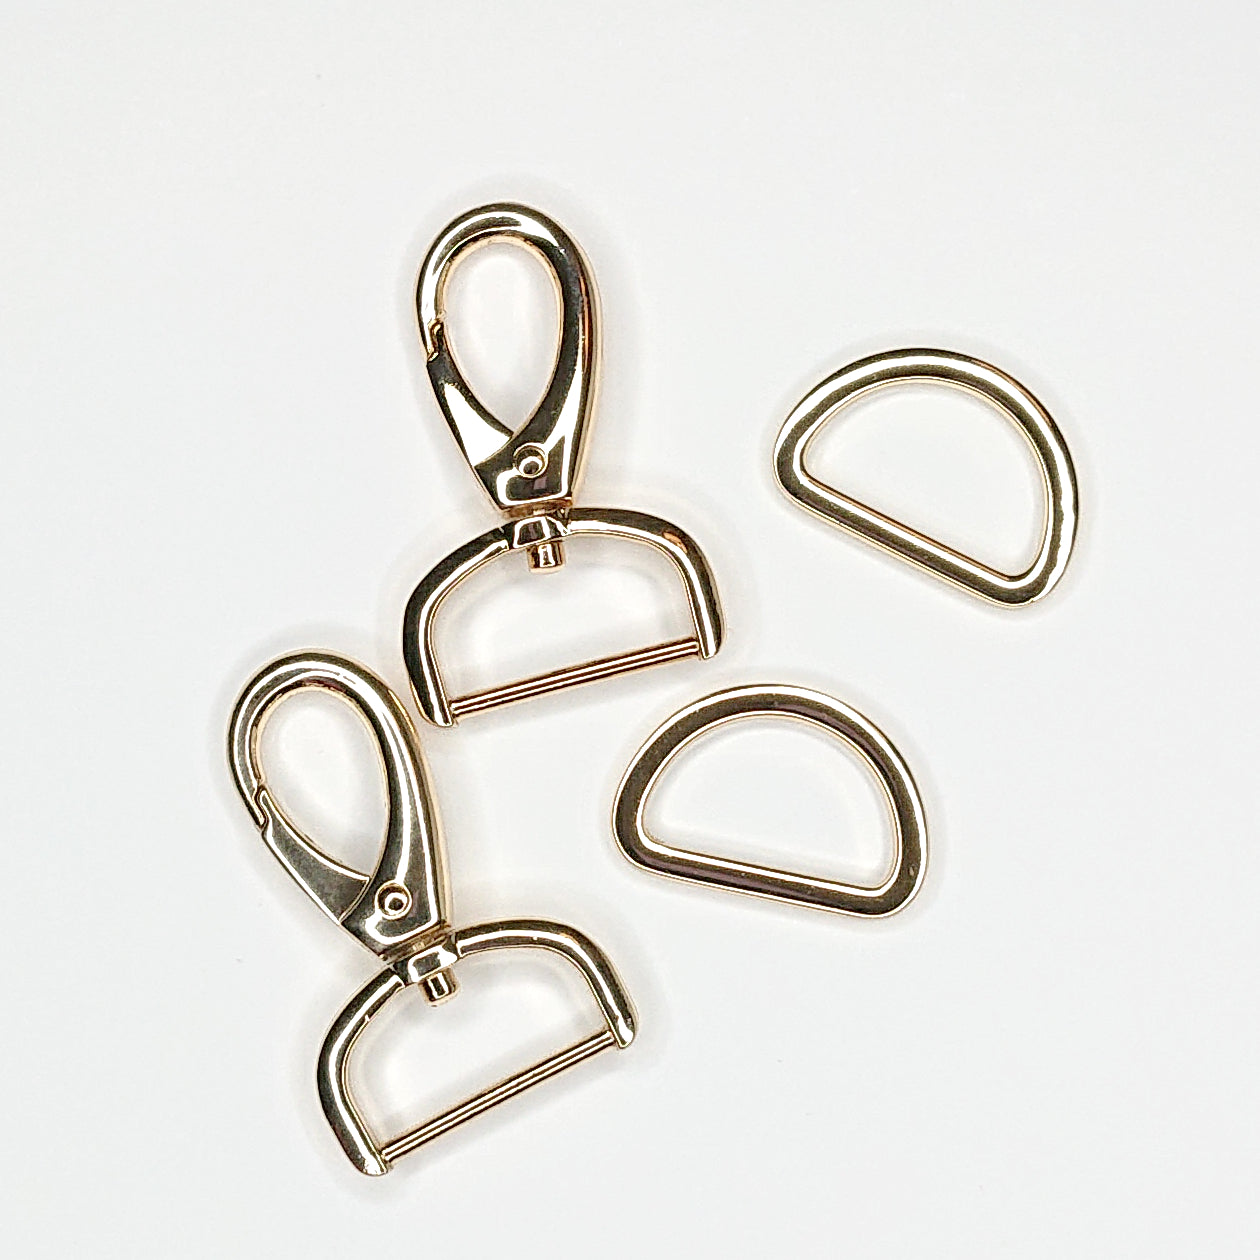 Swirl Snap Hook + D ring Bundle  (1.8cm inner width)